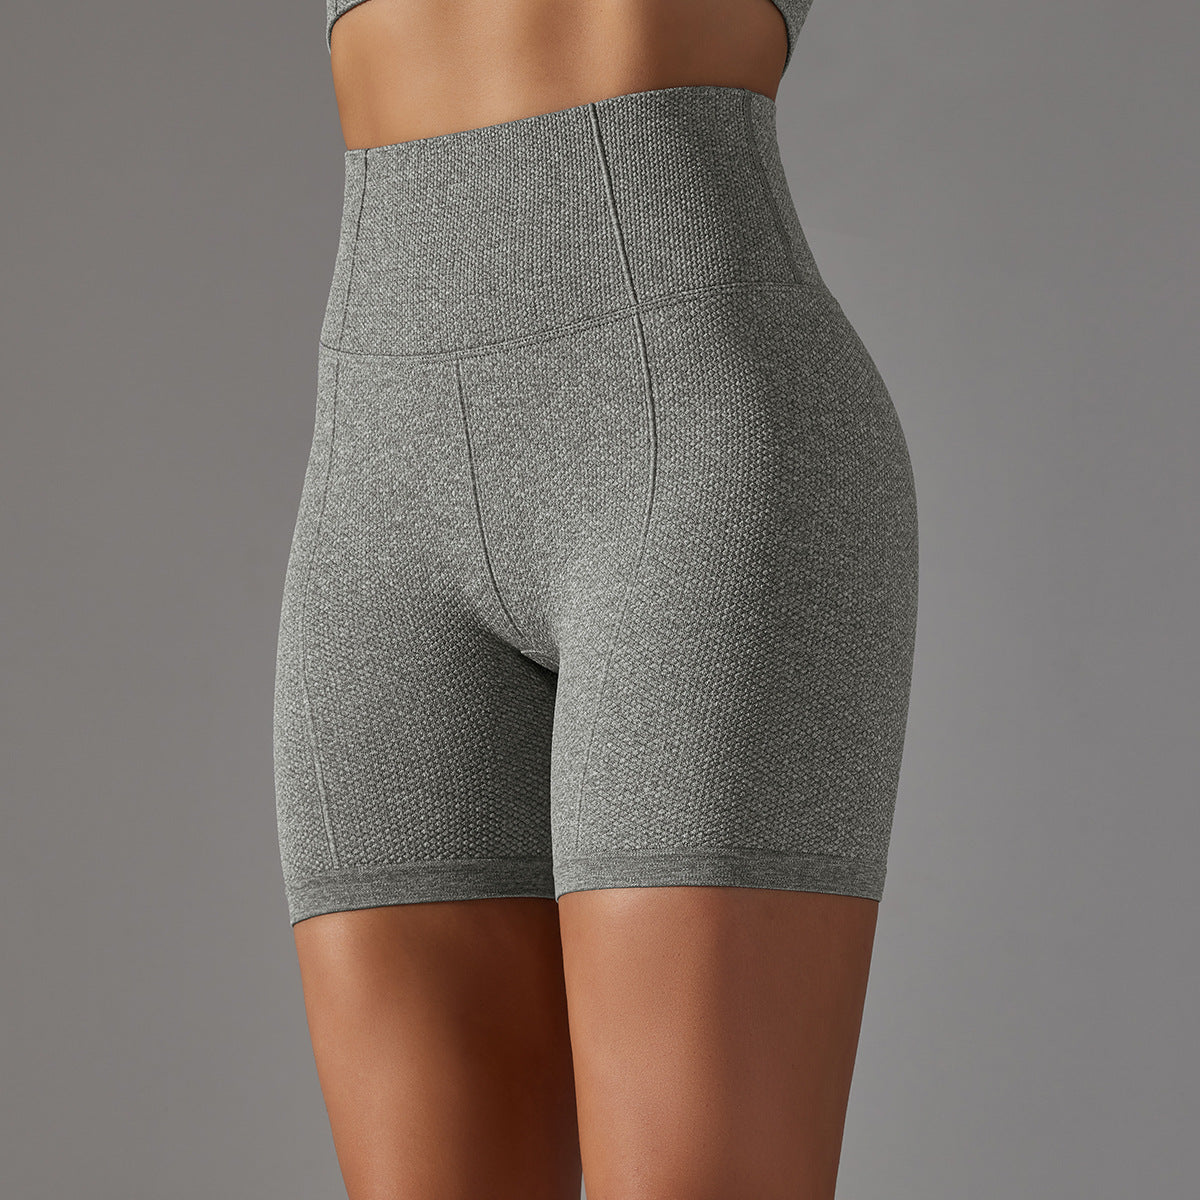 BamBam Seamless Solid Color Jacquard High Waist Tummy Control Butt Lift Yoga Shorts Sports Running Fitness Pants Women - BamBam